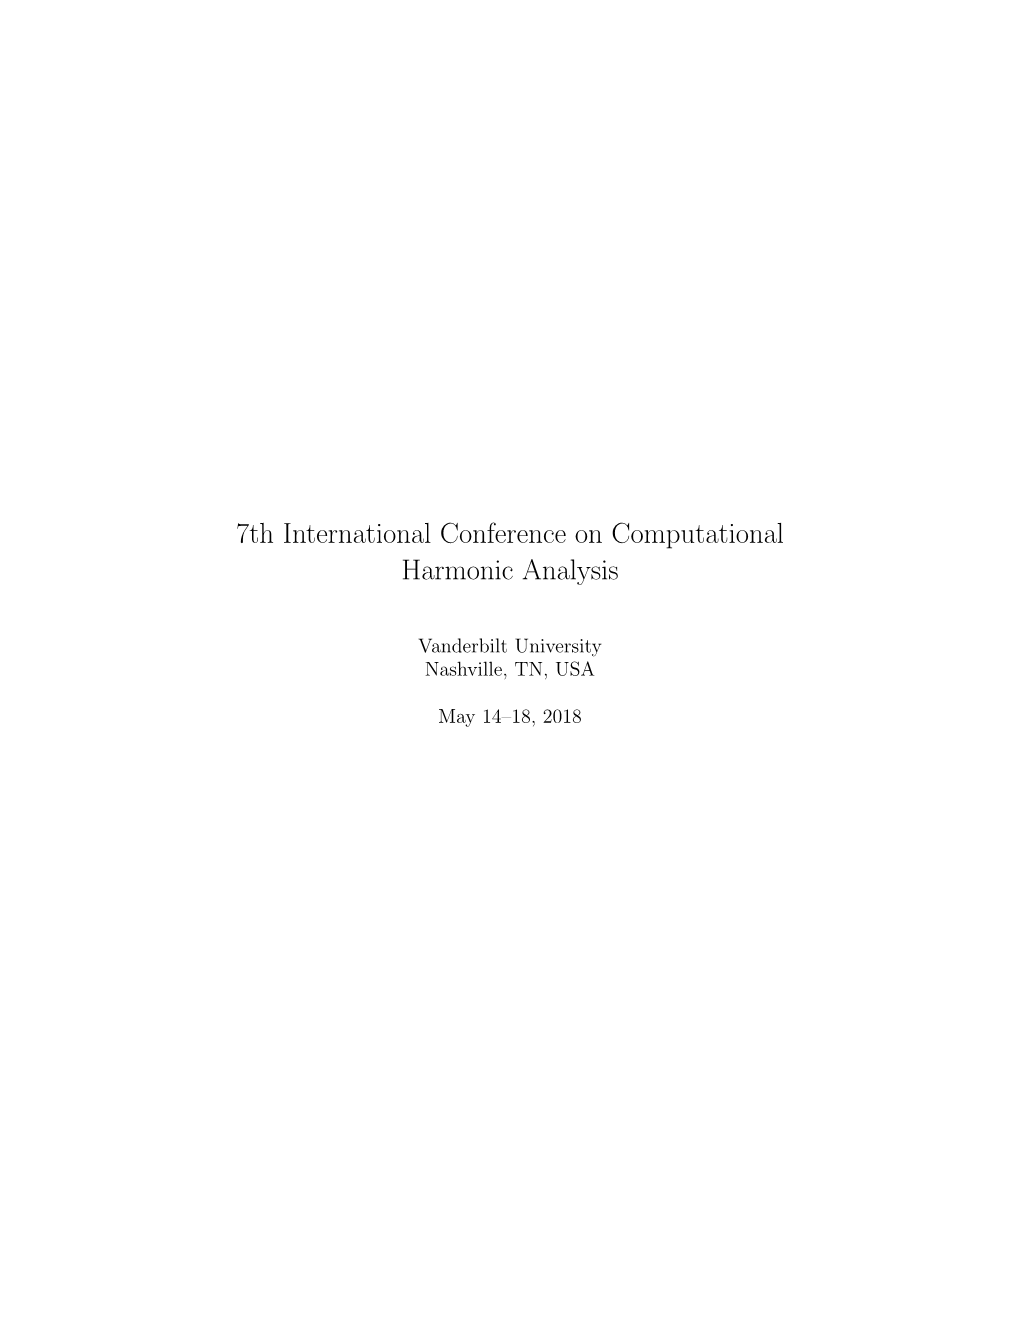 7Th International Conference on Computational Harmonic Analysis